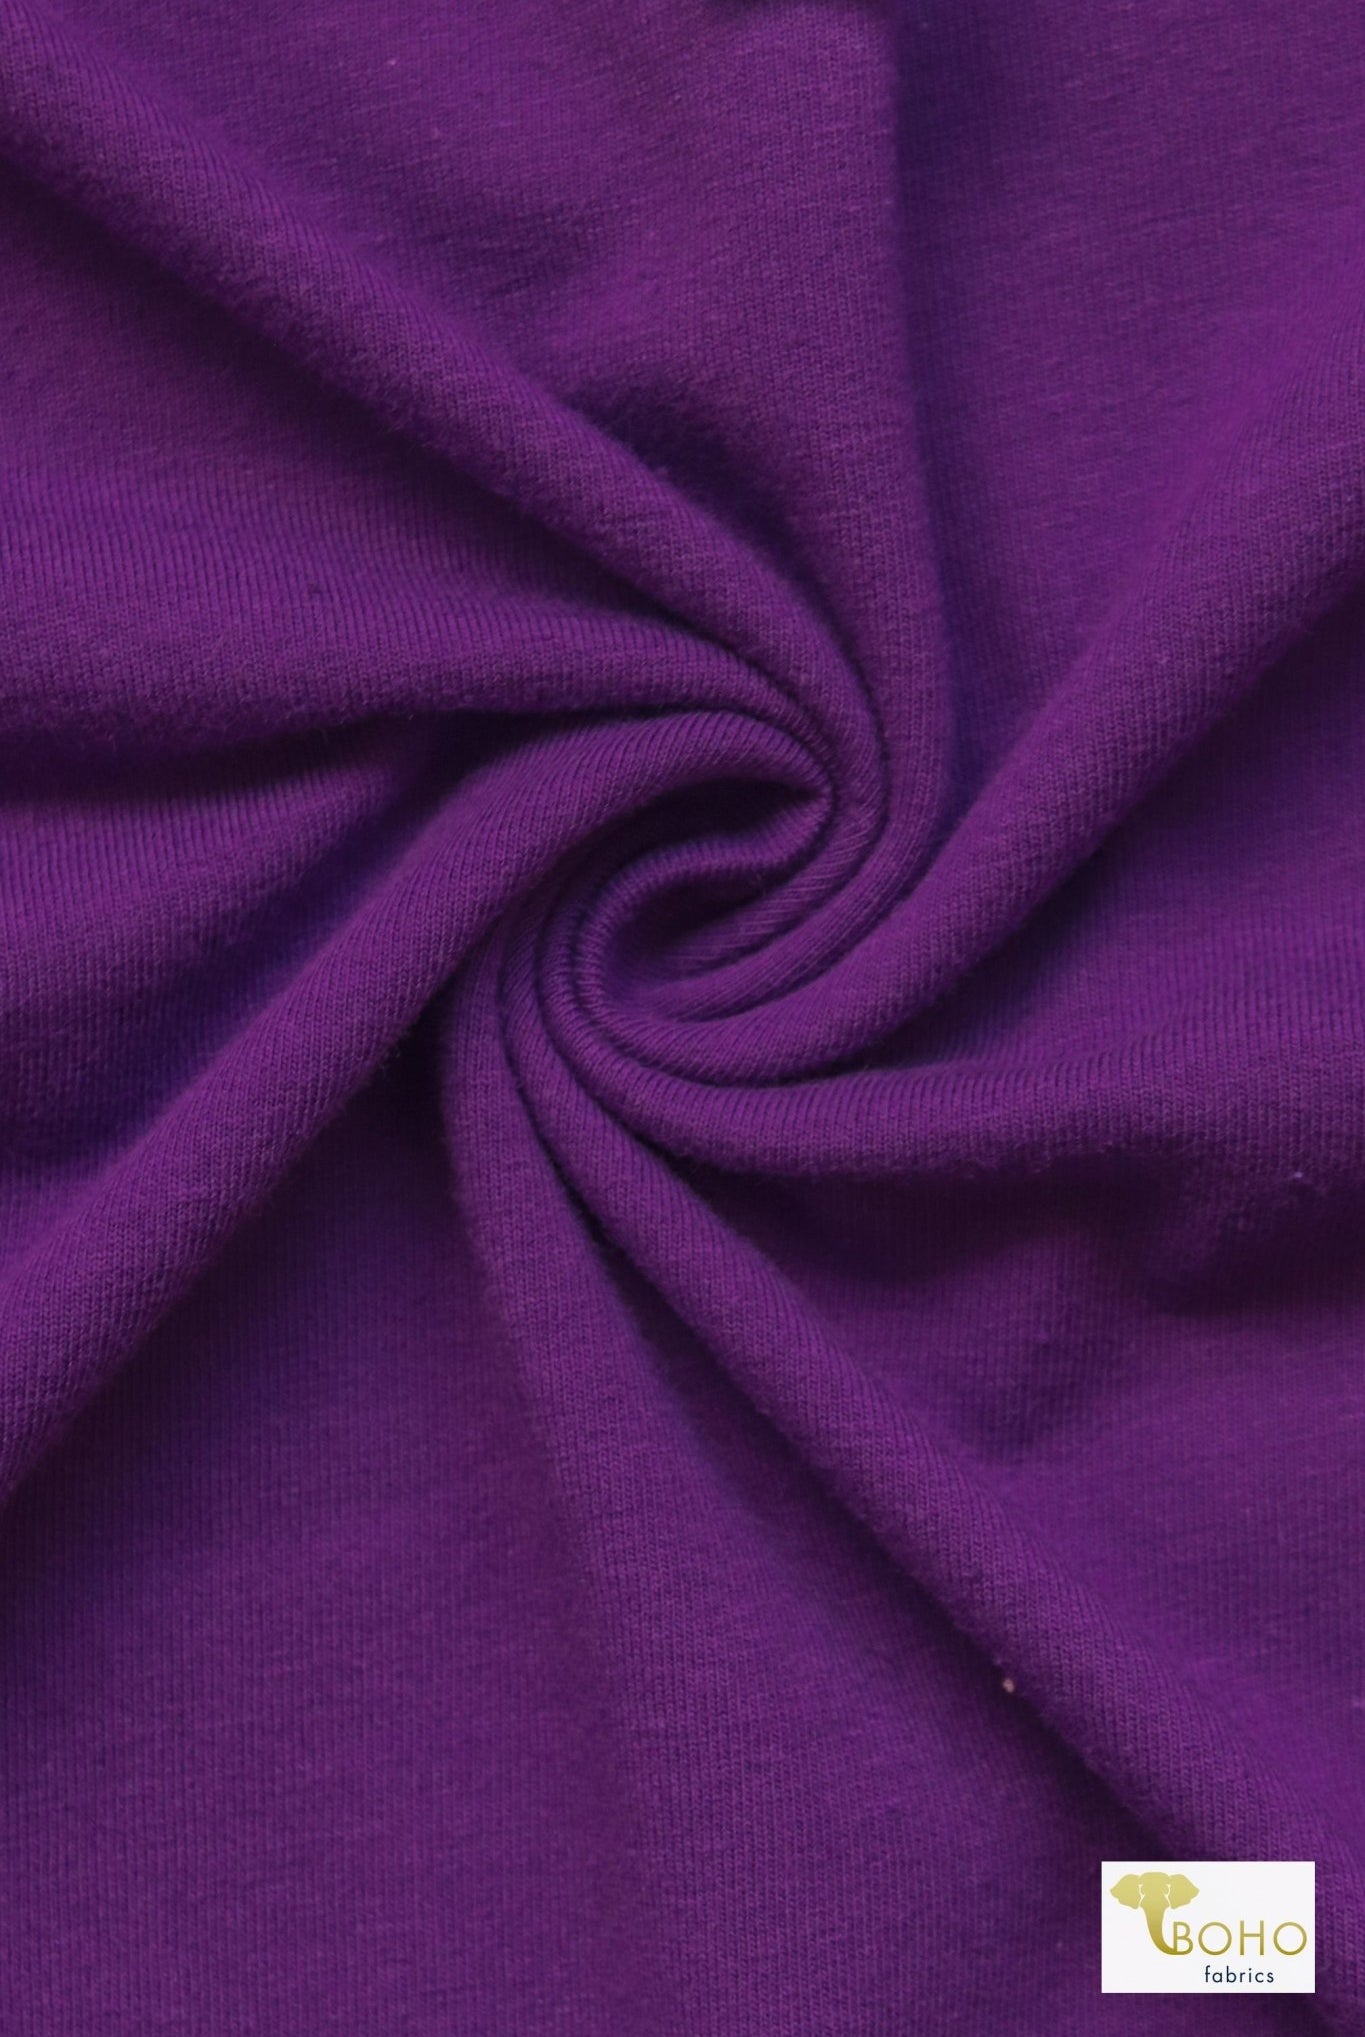 Vivid Violet Purple, Solid Cotton Spandex Knit Fabric, 9 oz. - Boho Fabrics